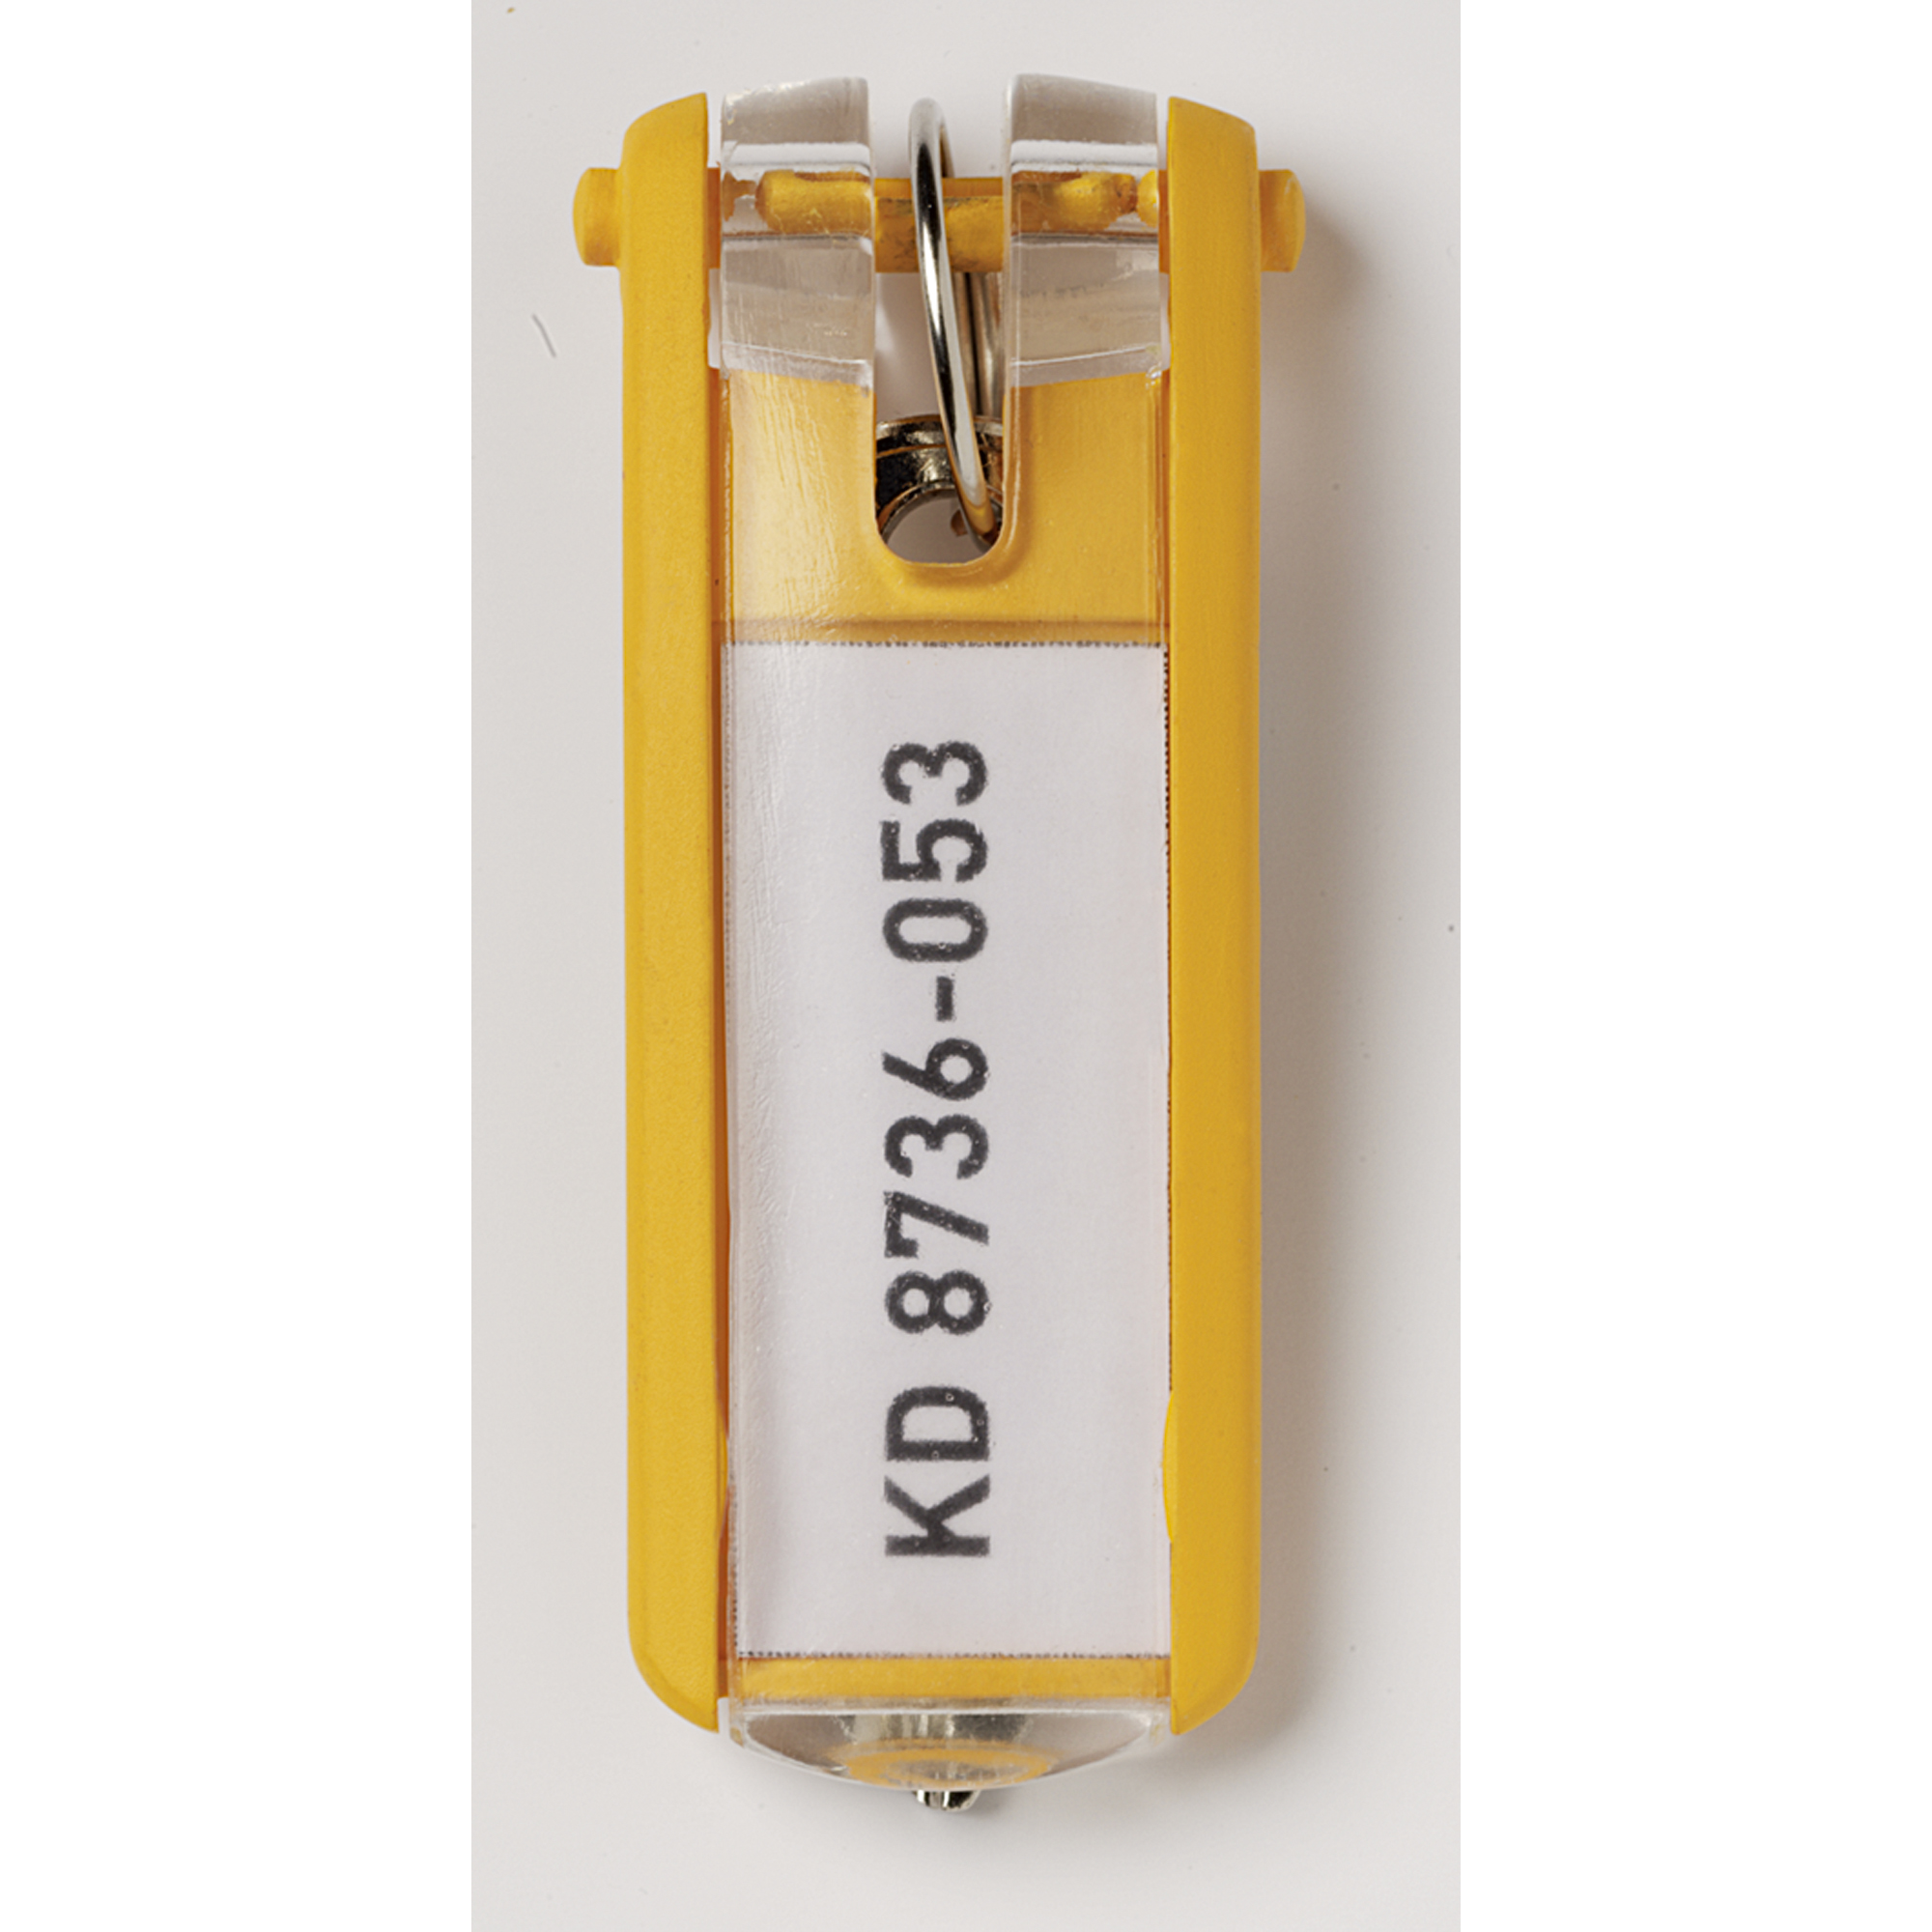 DURABLE Schlüsselanhänger KEY CLIP gelb